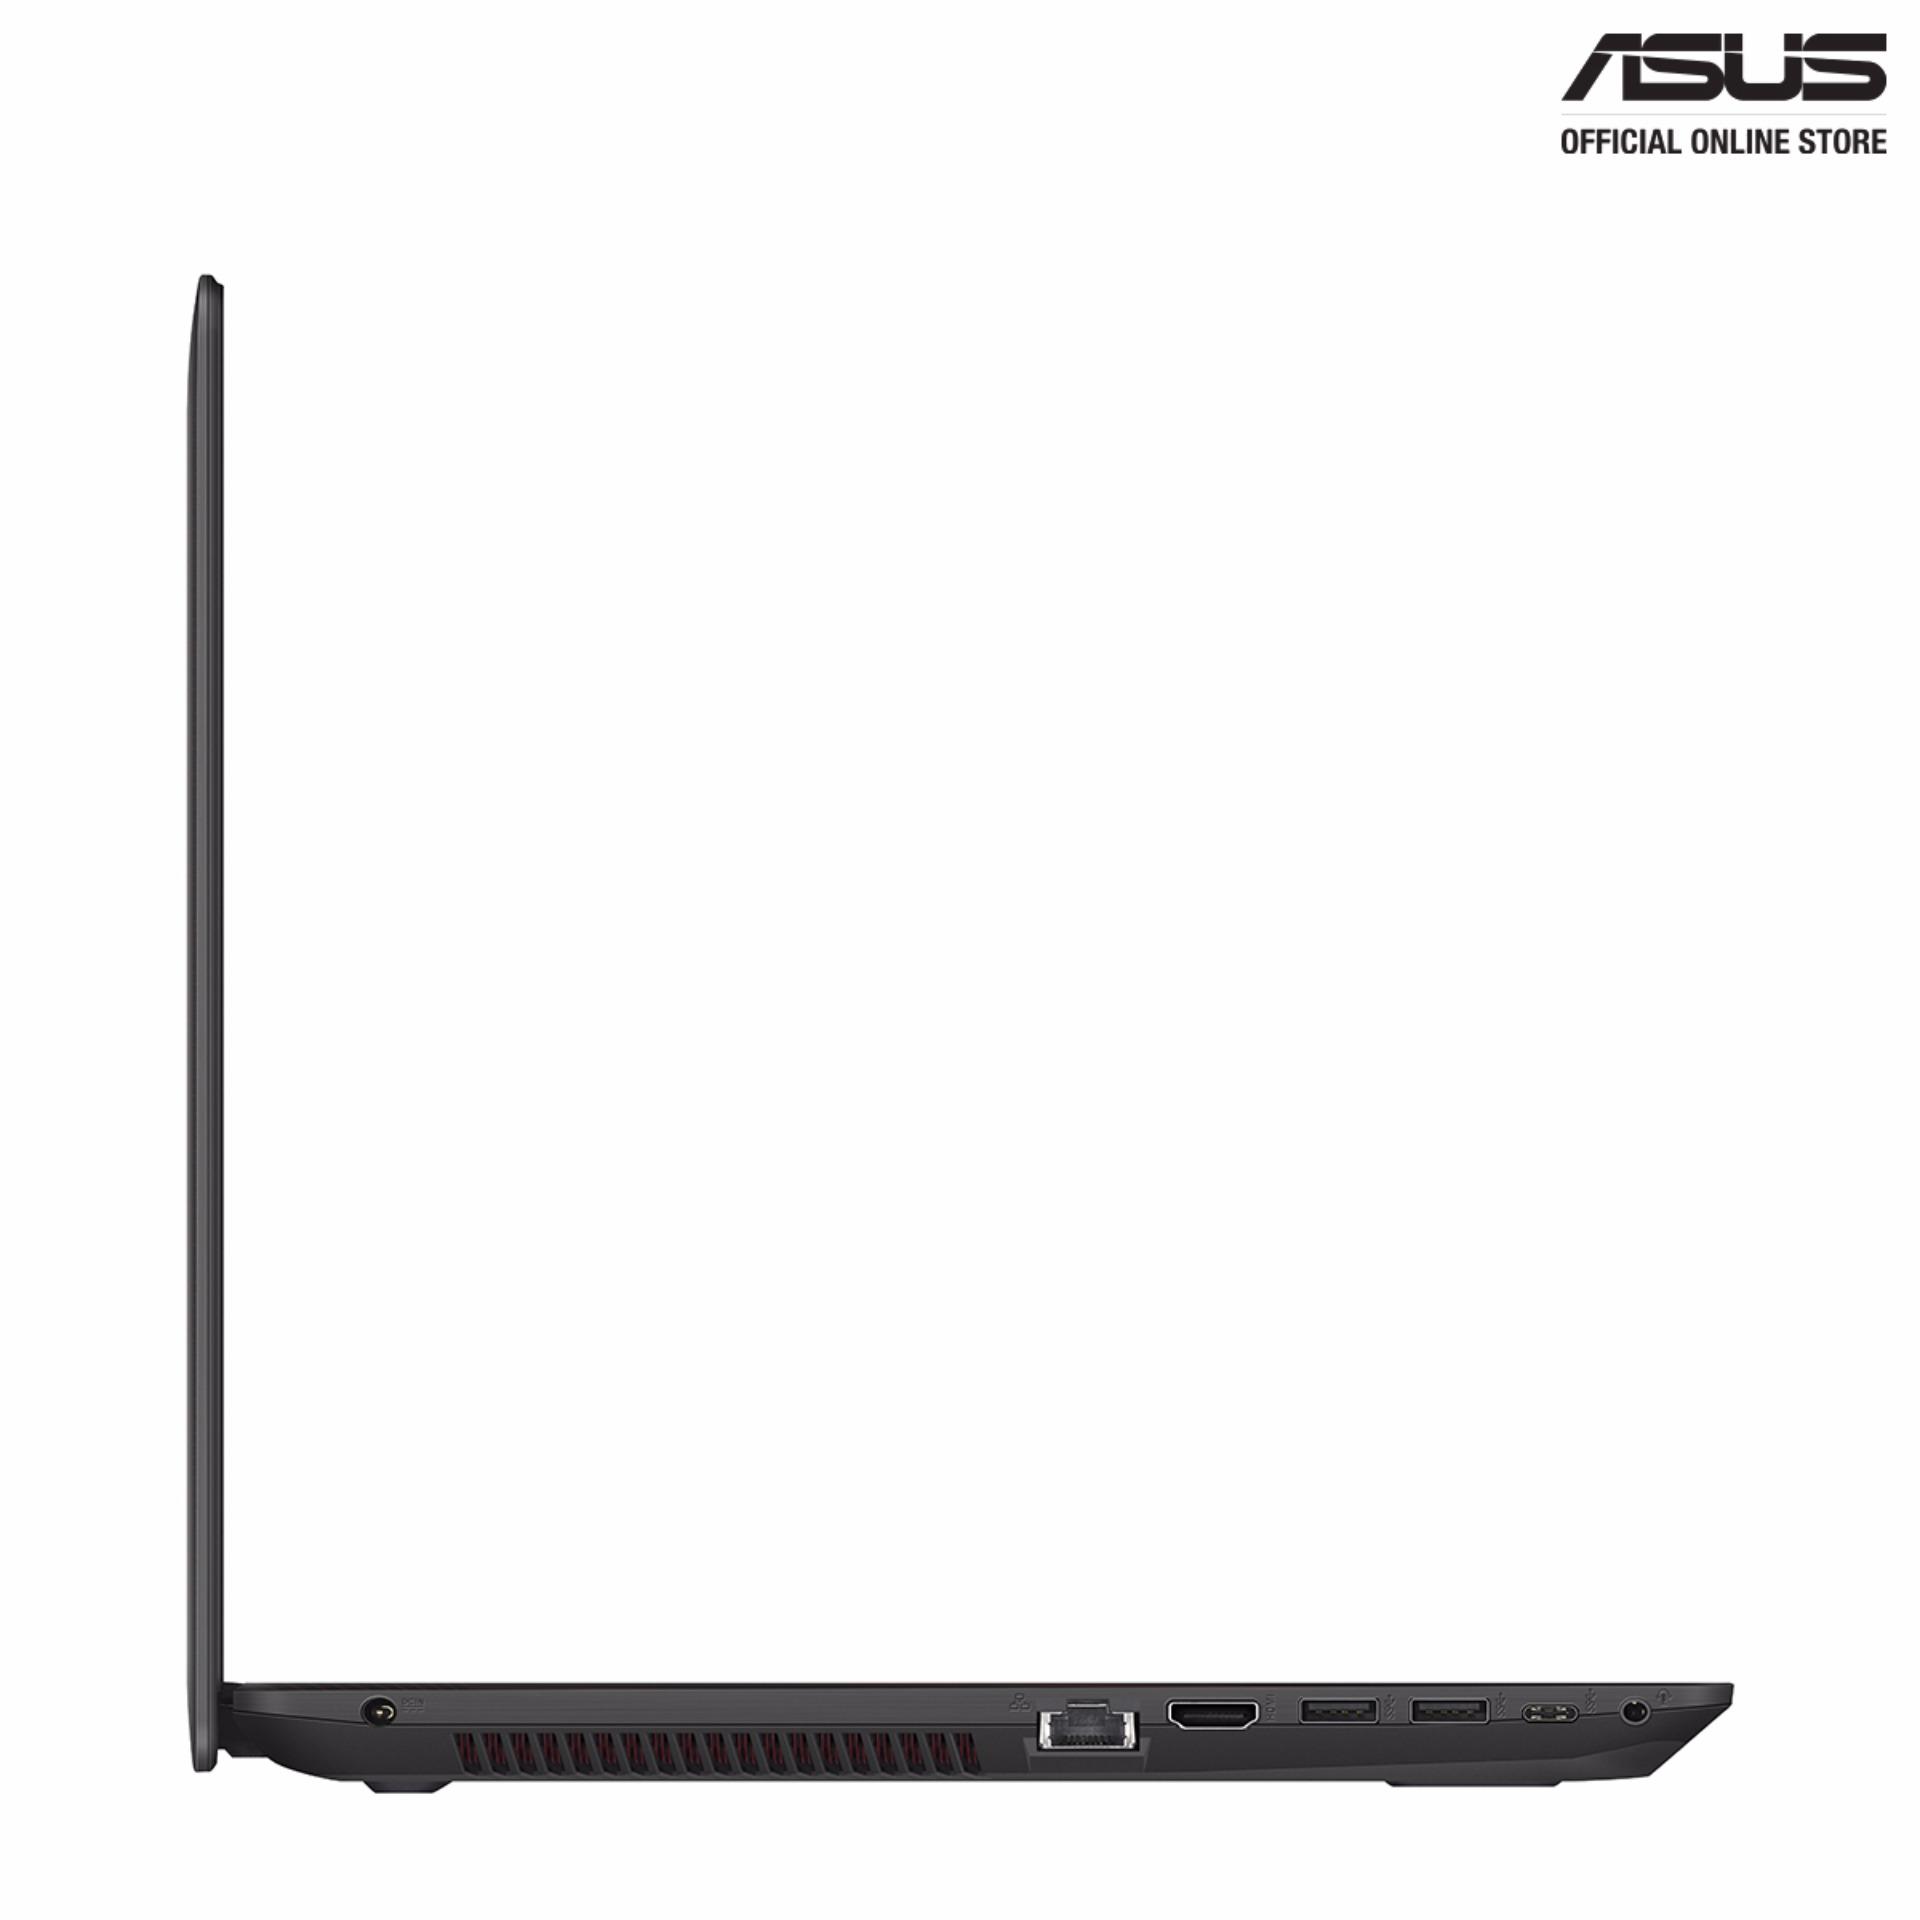 ASUS VivoBook FX553VD-DM462T (Metal) [FREE Microsoft Xbox One S (1TB)]